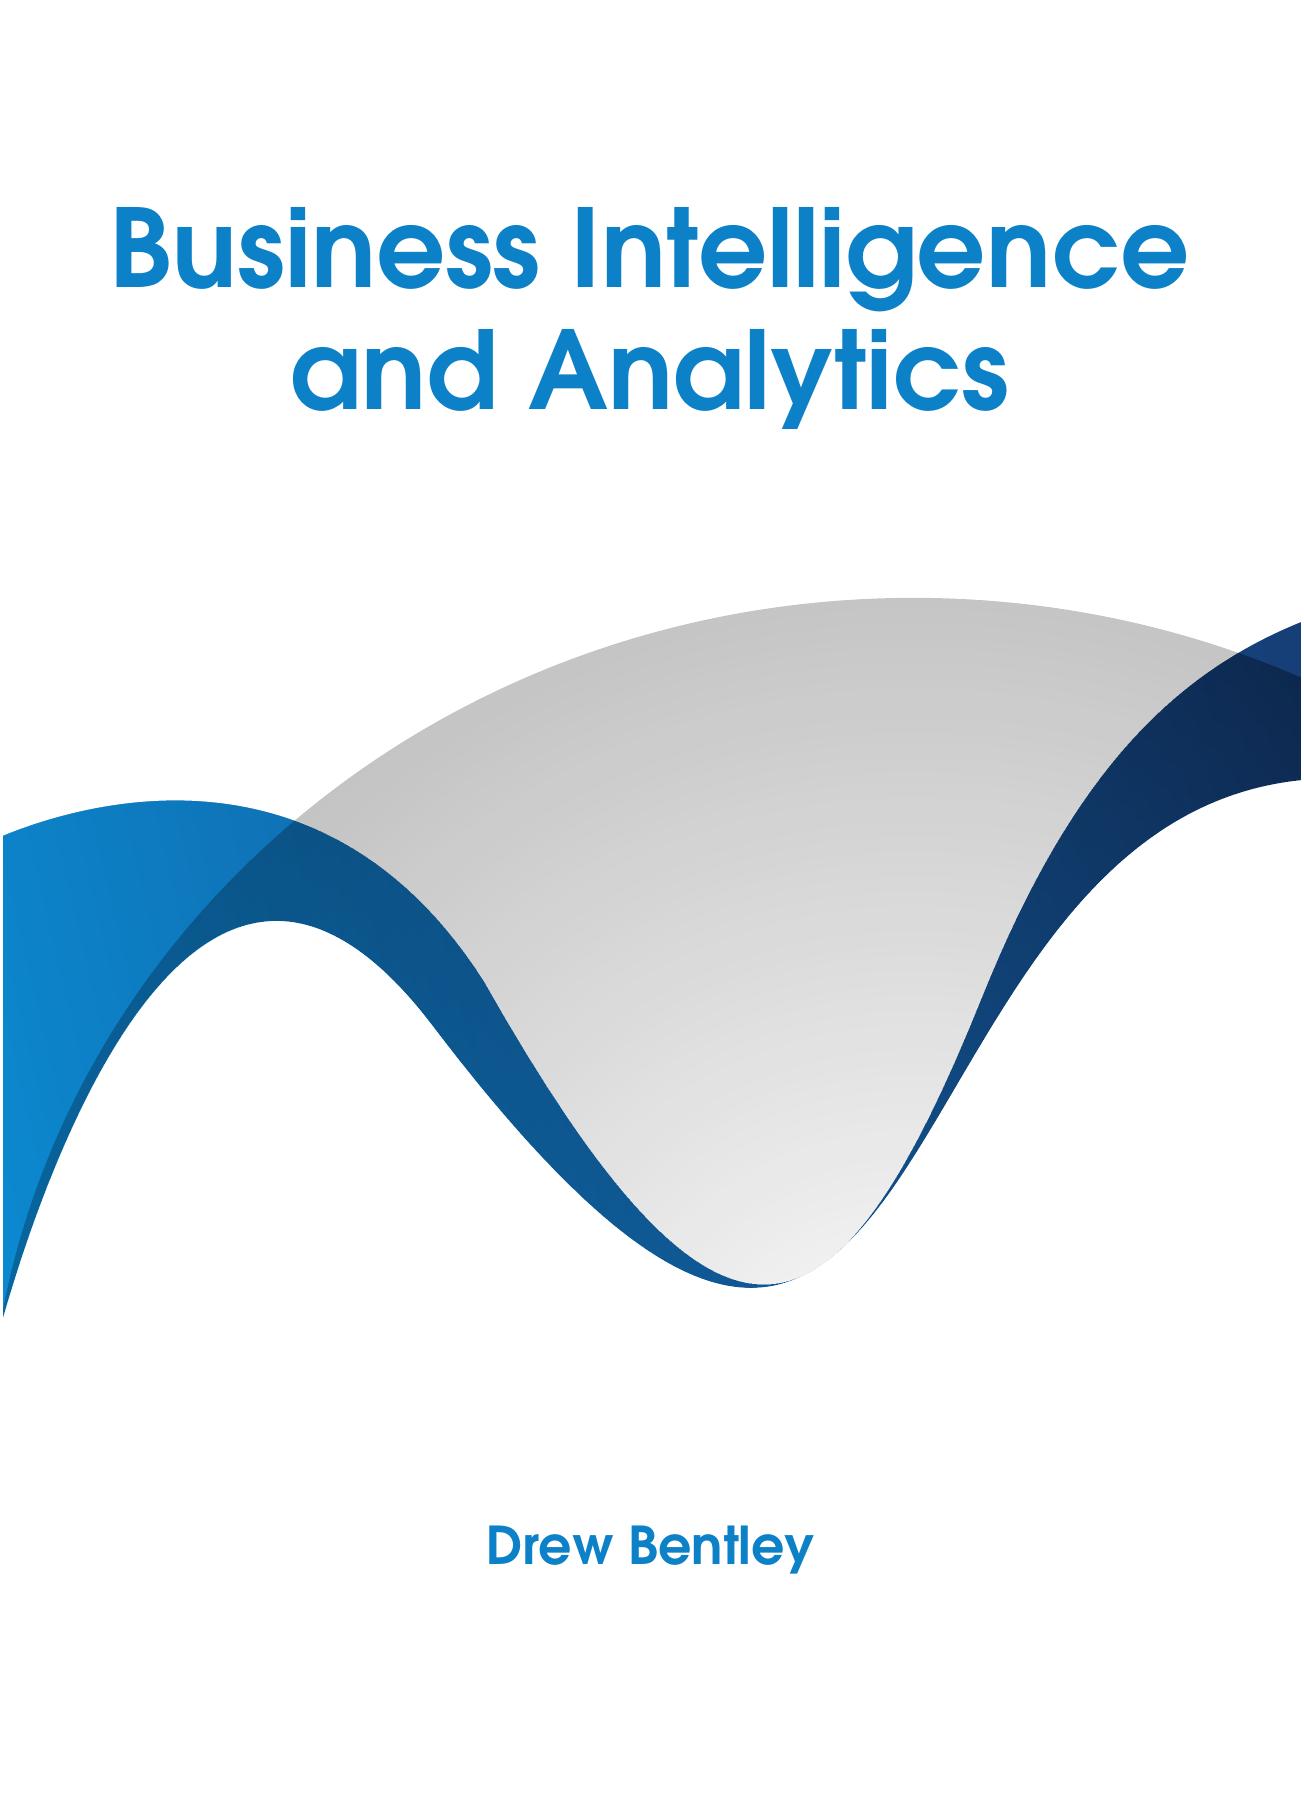 Business Intelligence and Analytics 2017